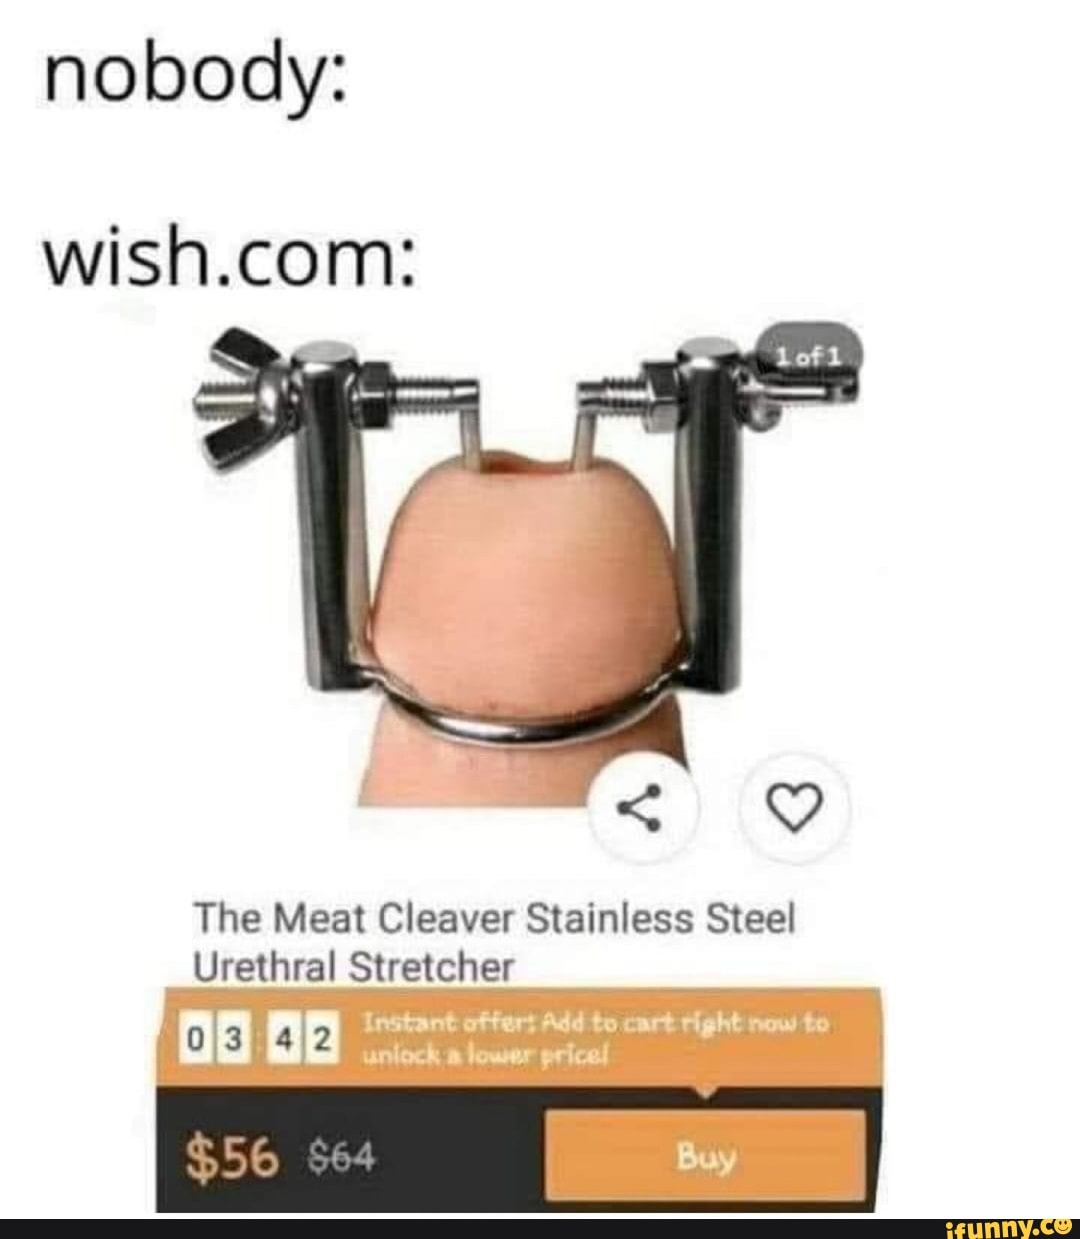 nobody: wish.com